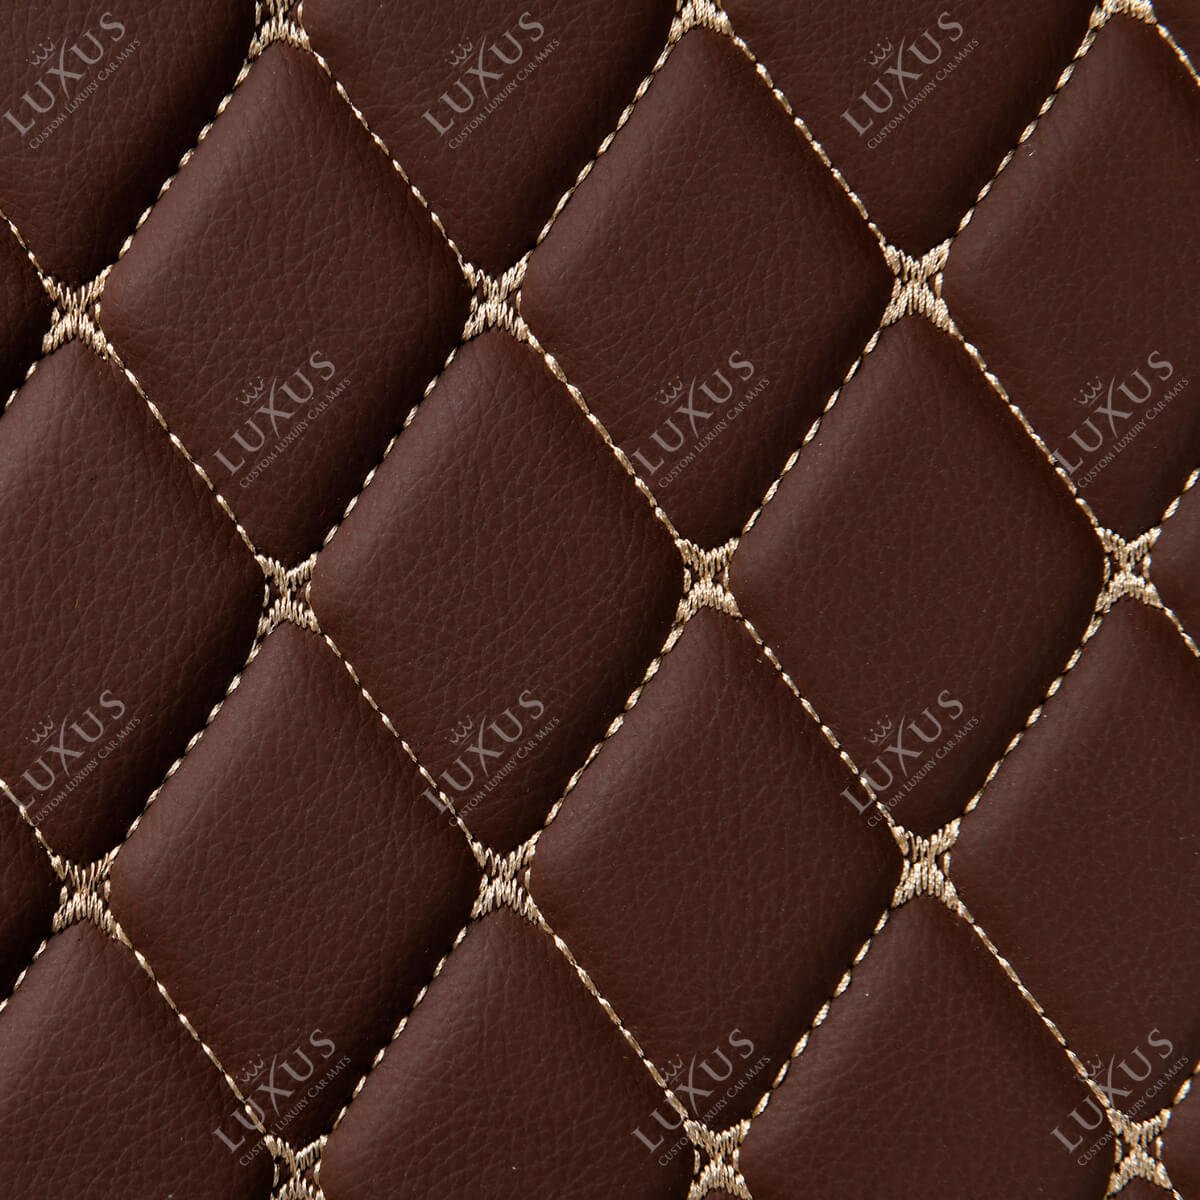 Luxus Car Mats™ - Chocoladebruine luxe lederen koffer-/koffermat